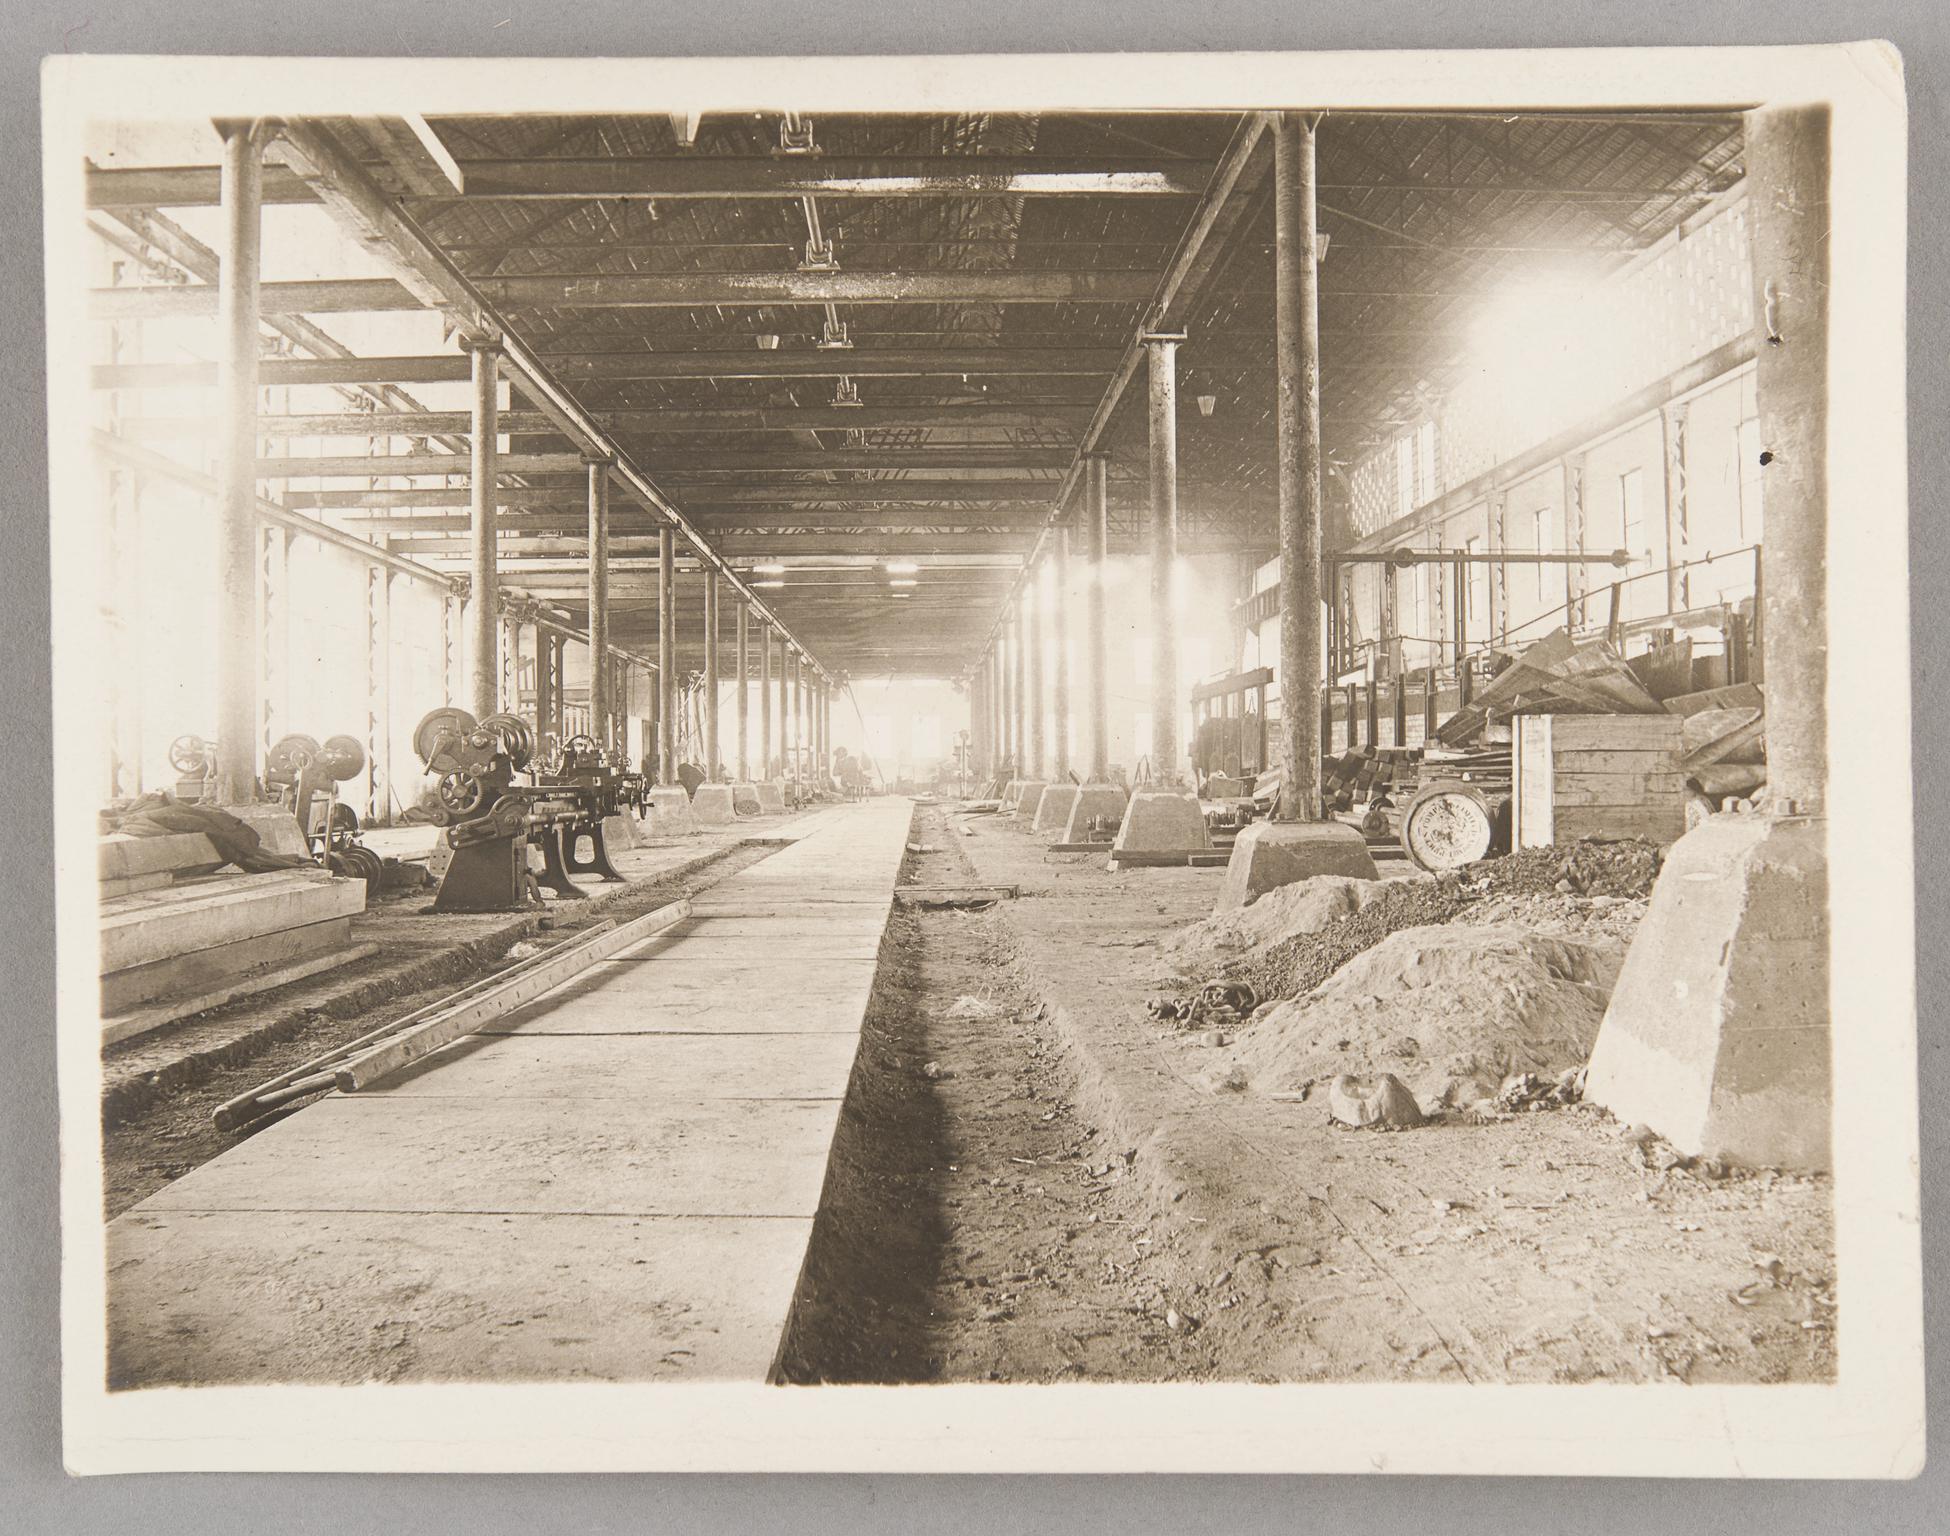 Llanelli shell factory, photograph